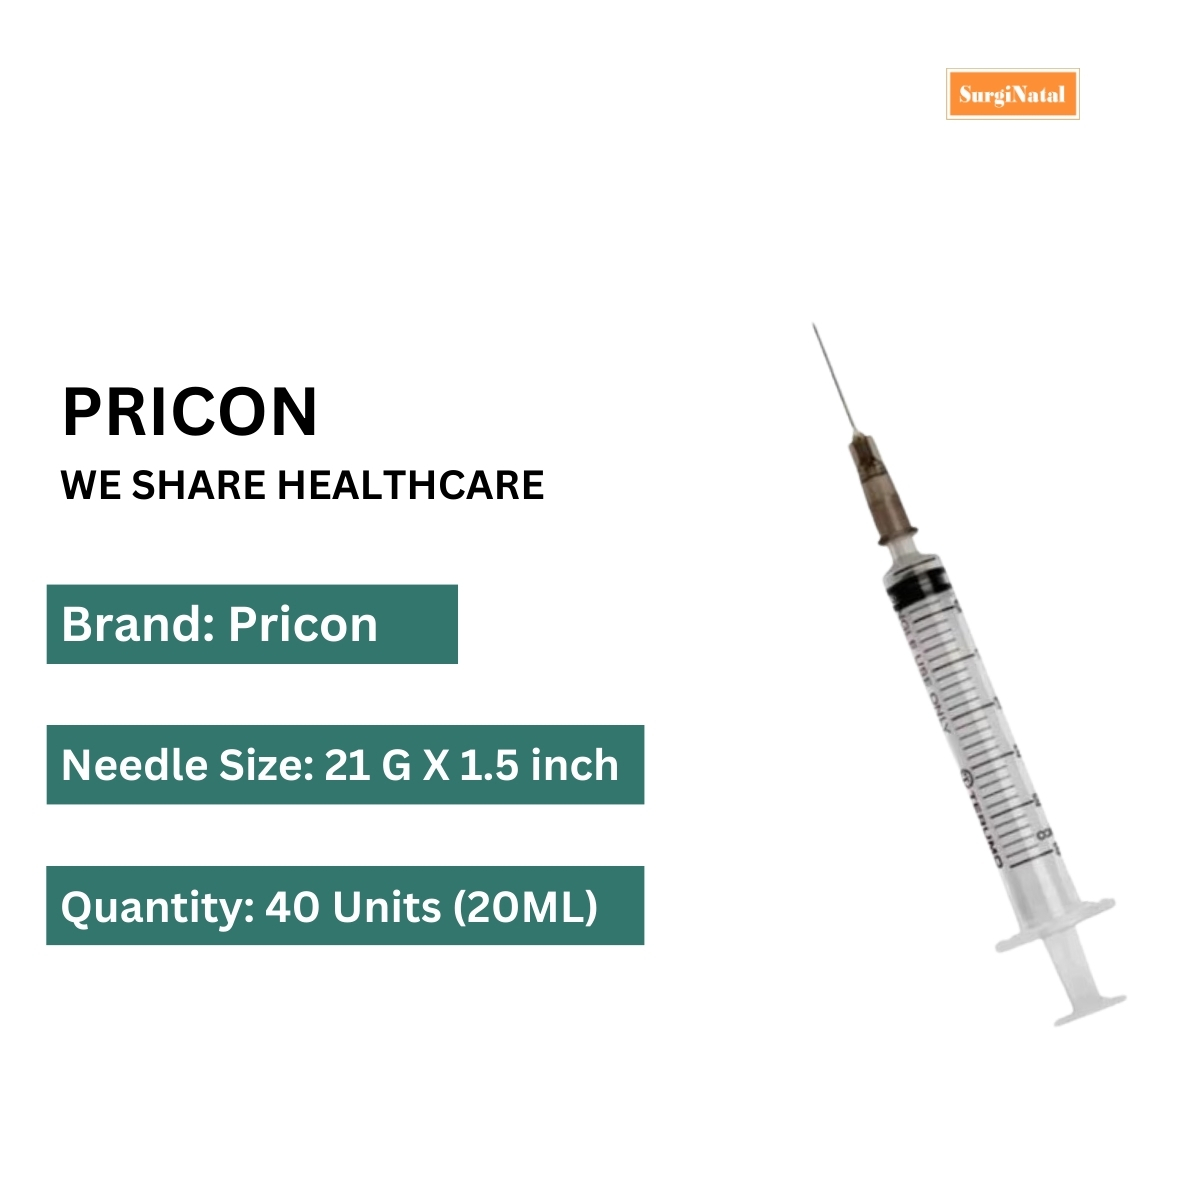 pricon 20ml syringe with needle - 40 units pack